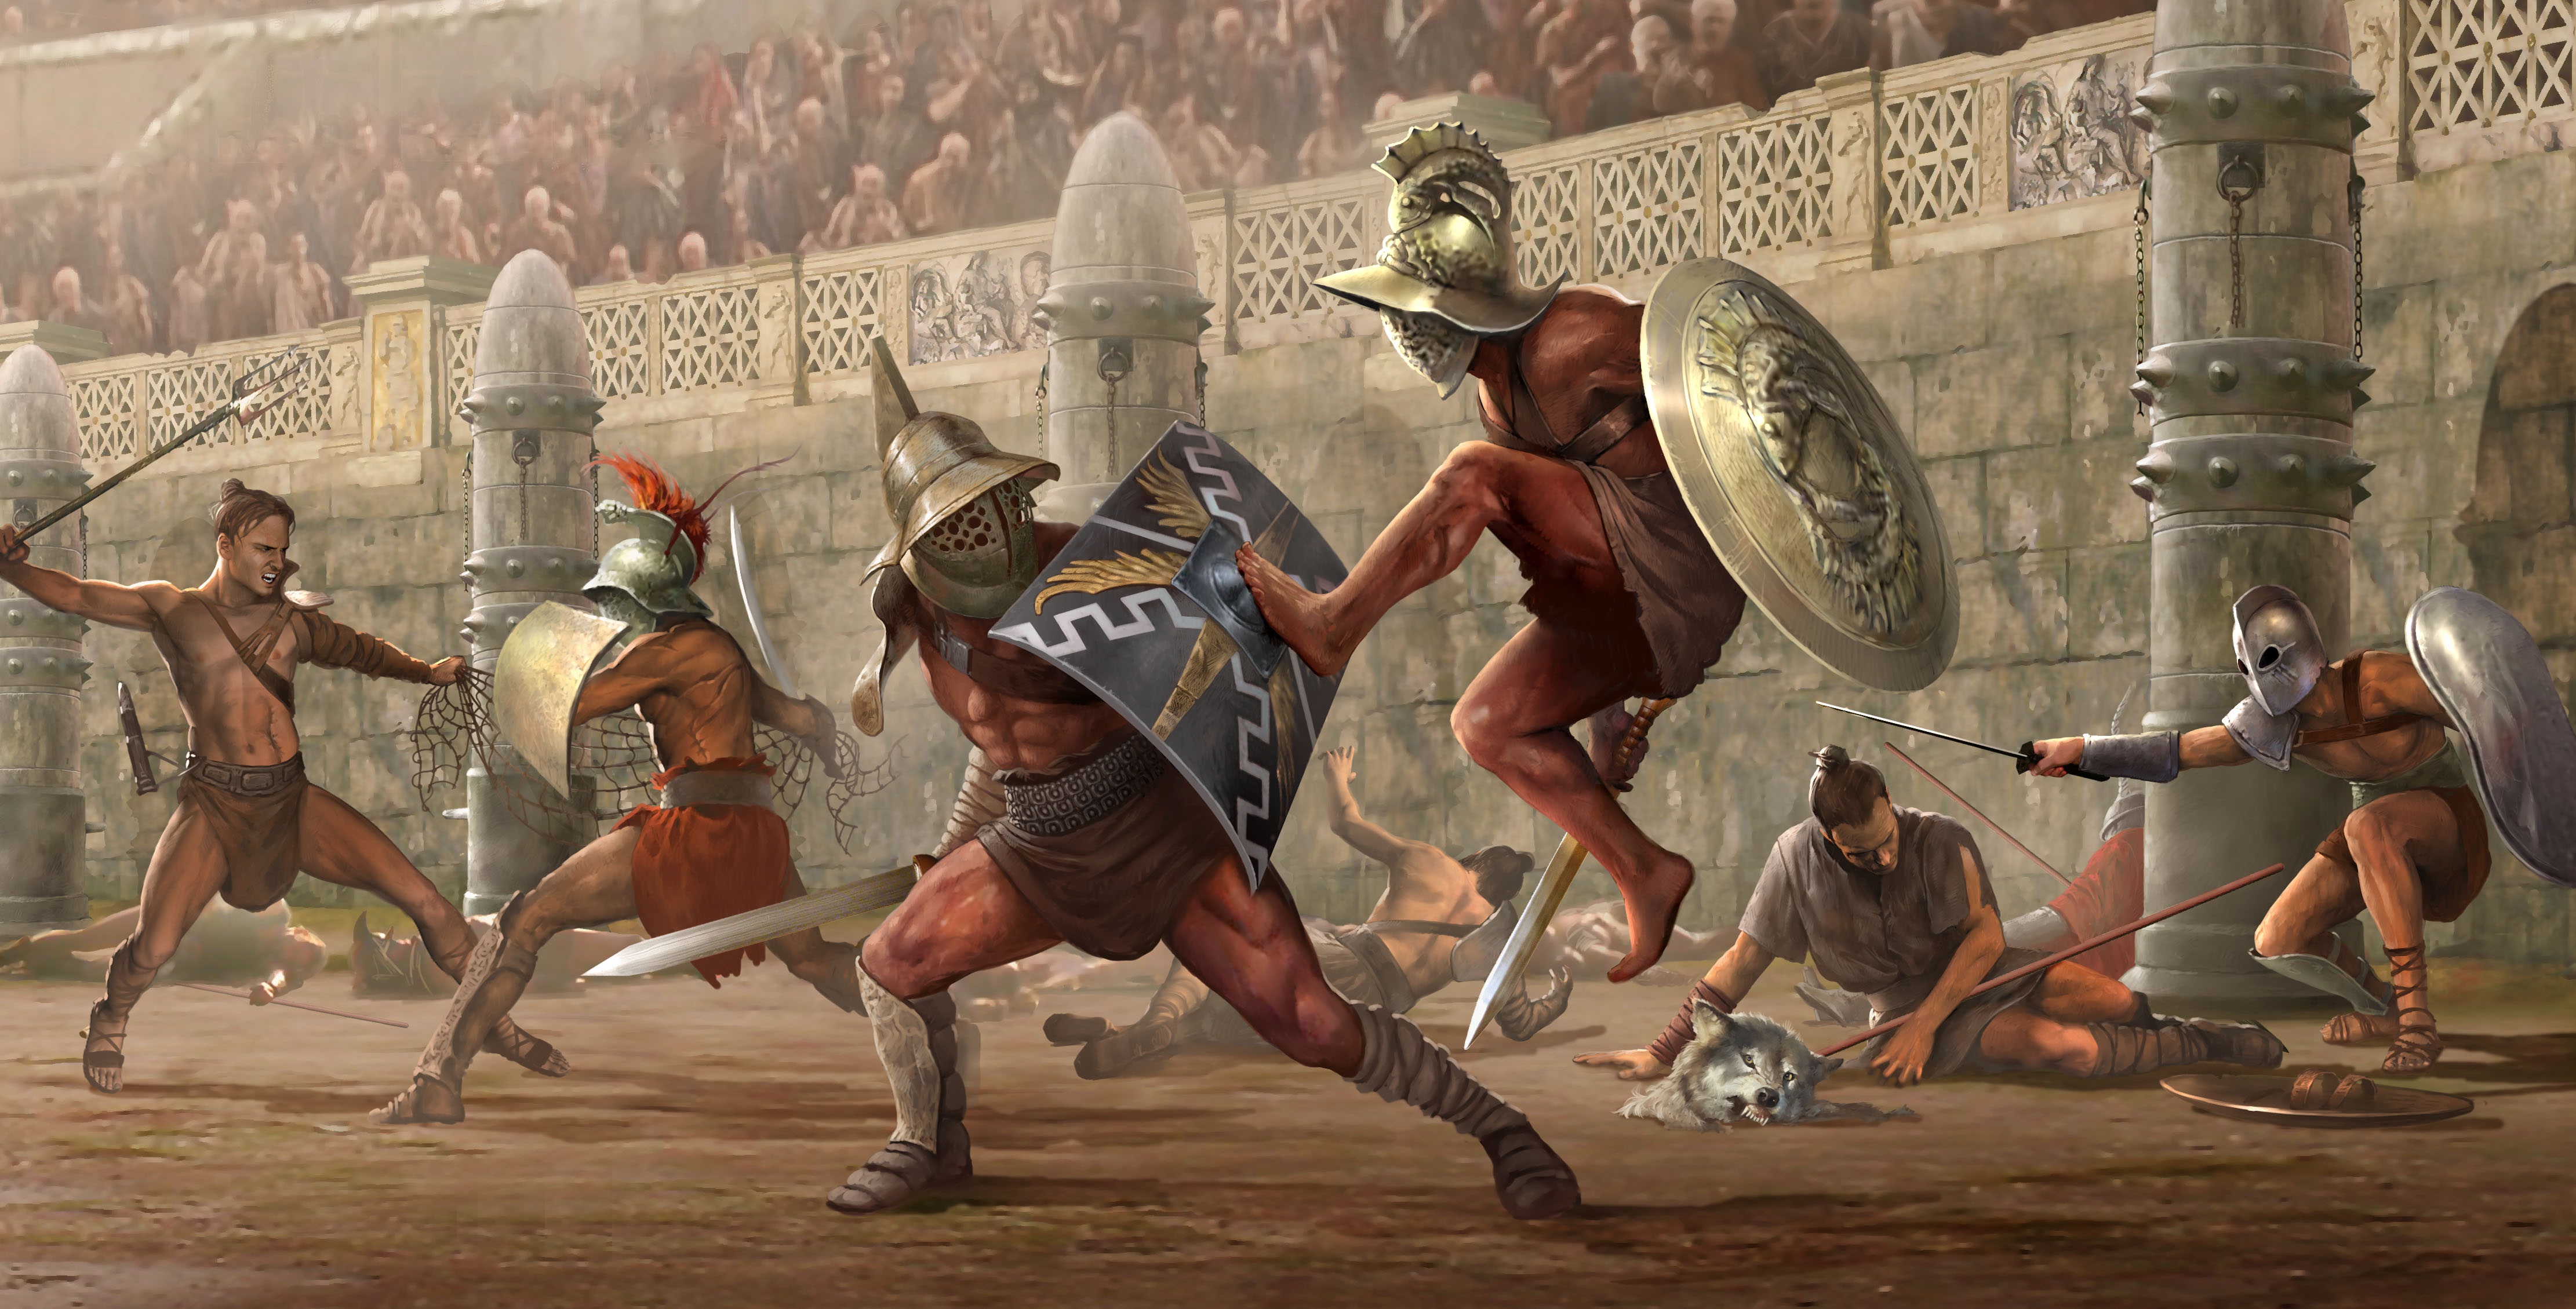 Gladiator Wallpapers